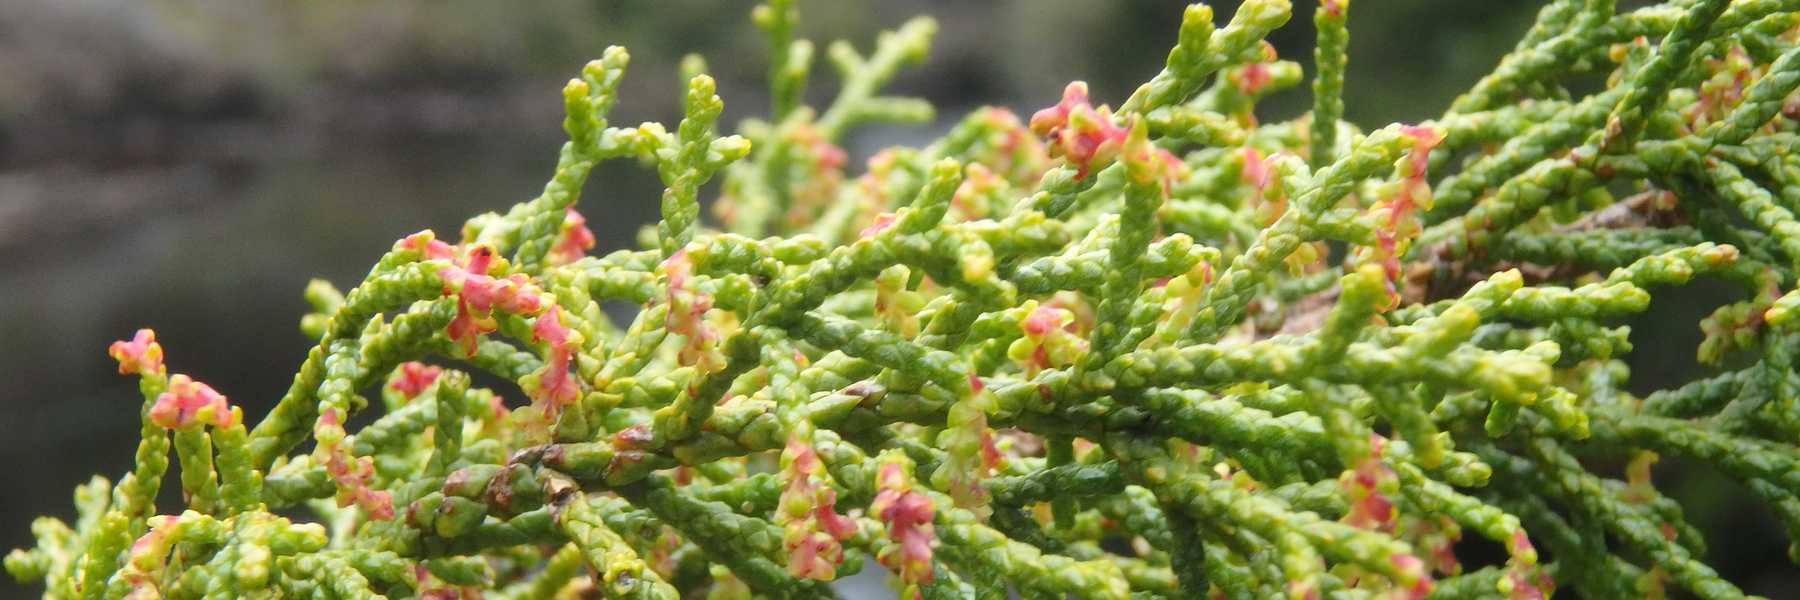 Huon pine leaves with fresh shoots - Lagarostrobos franklinii